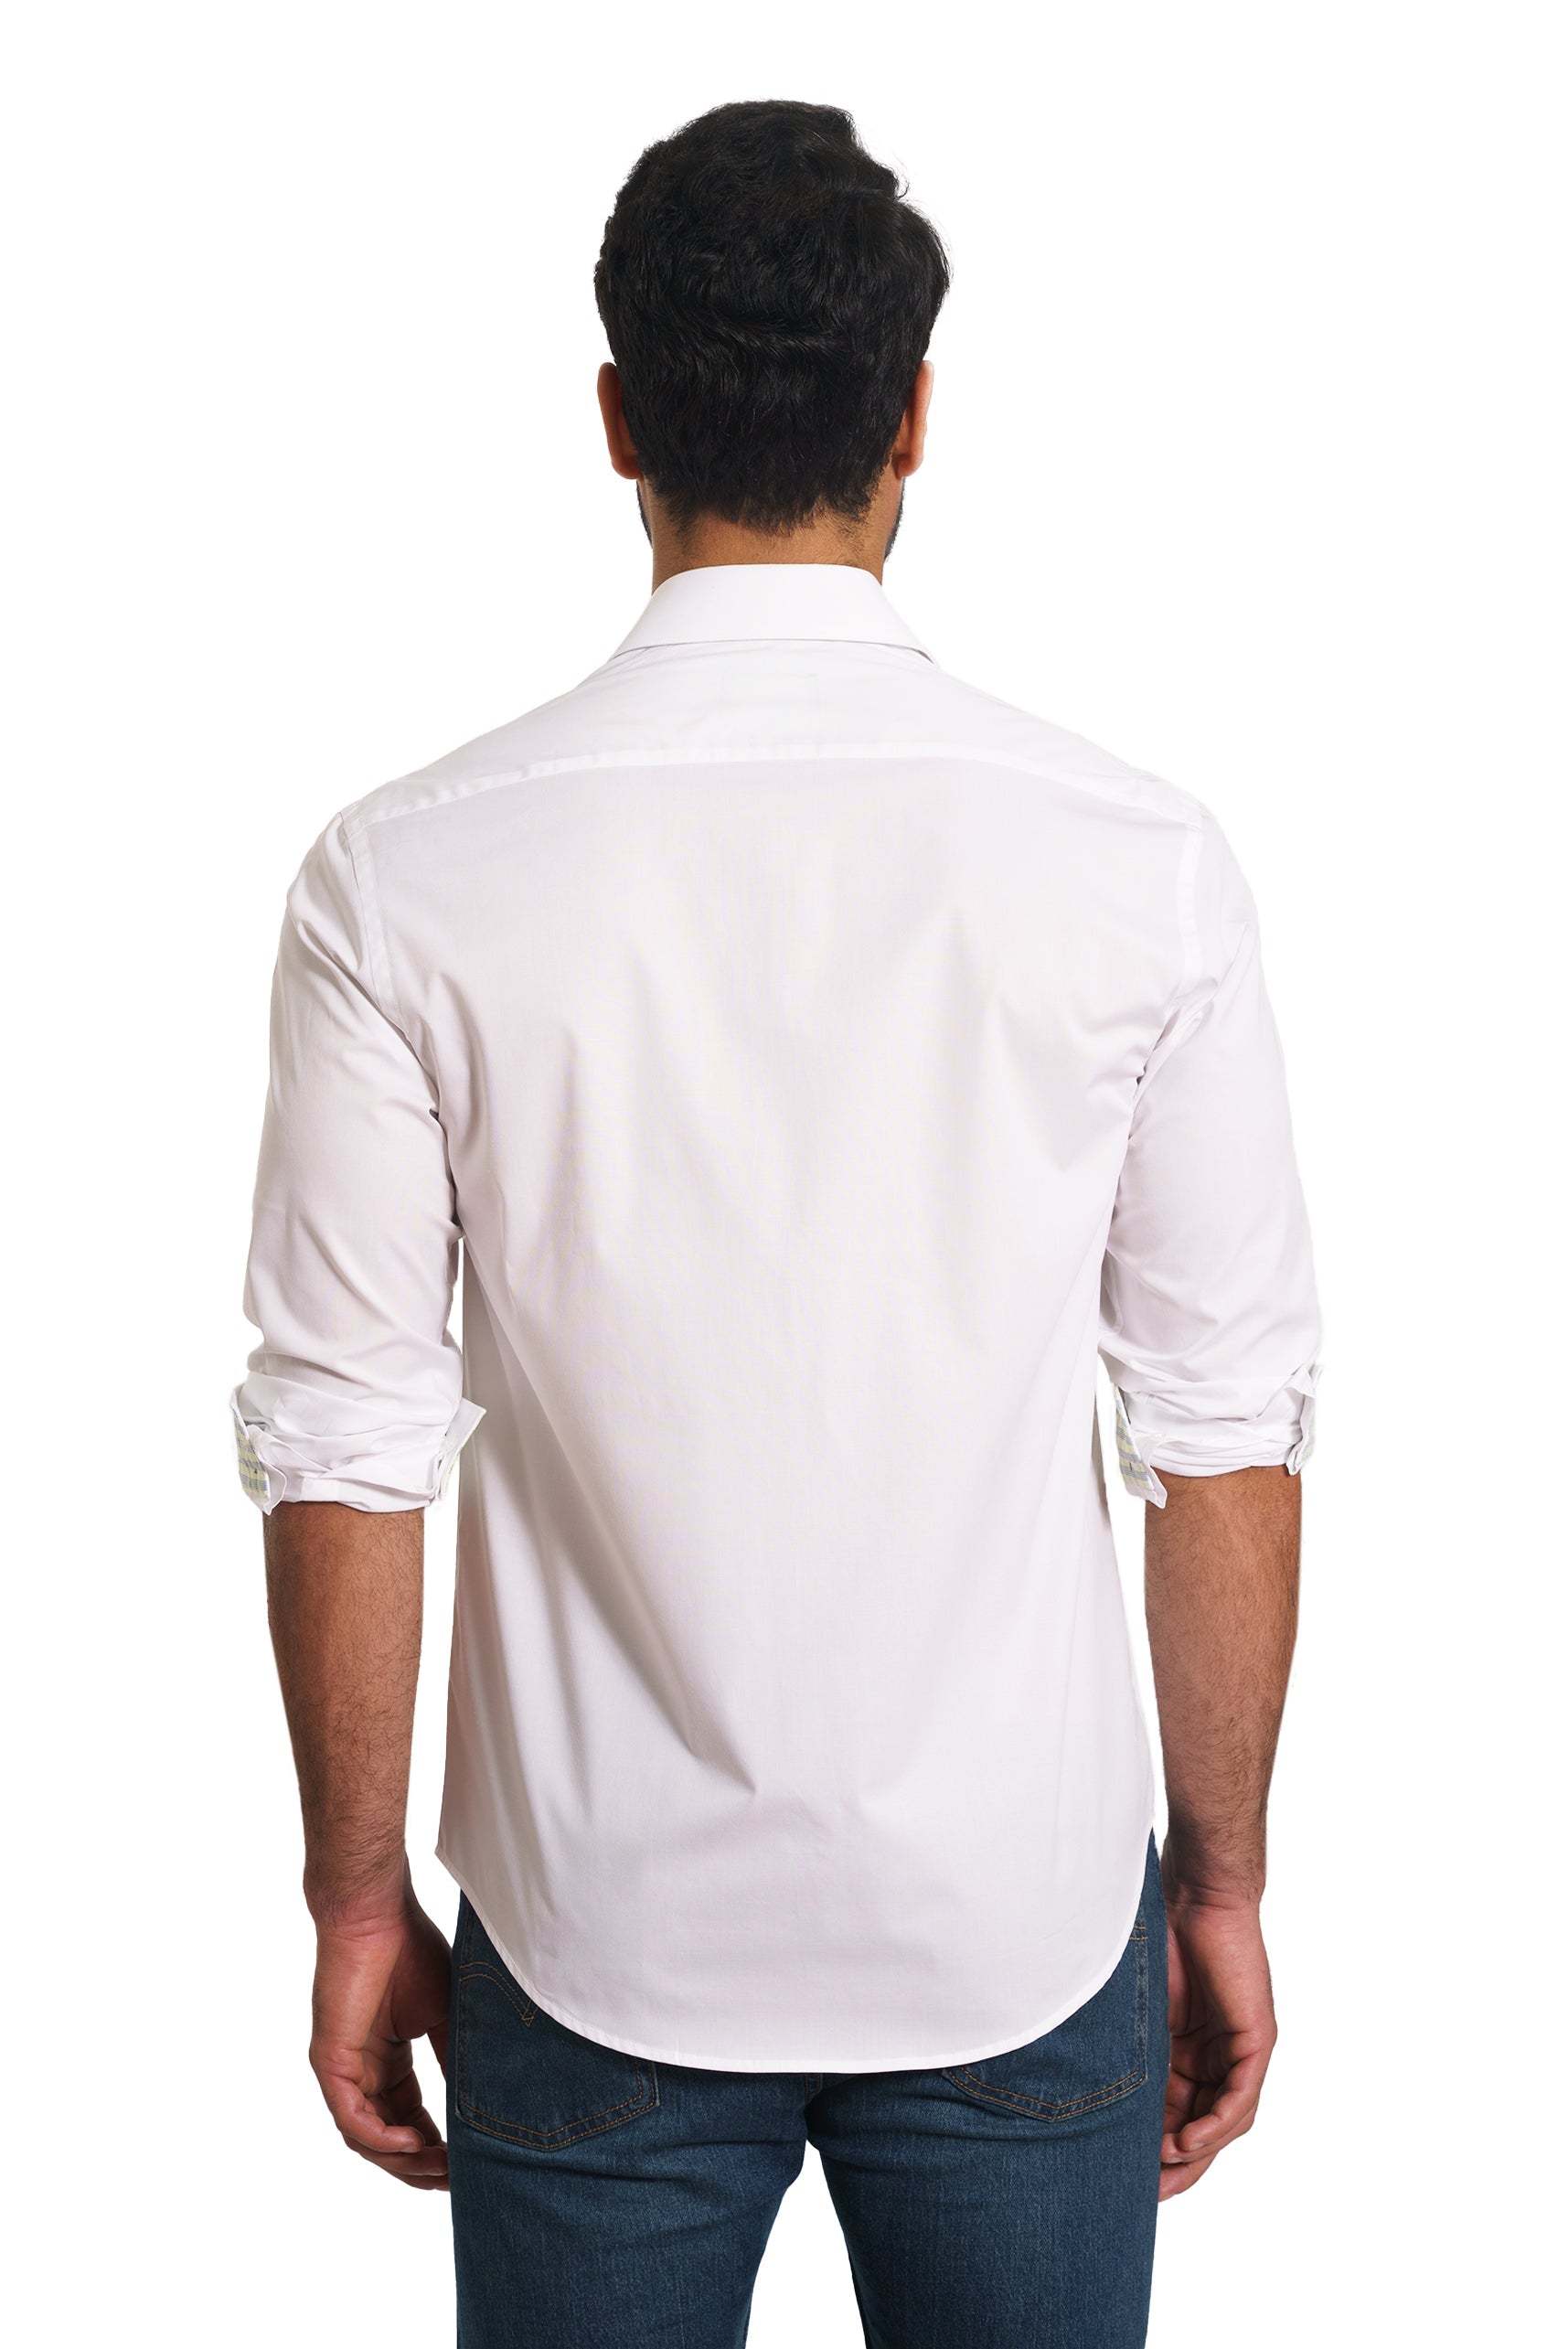 White Long Sleeve Shirt TP-7146 Back